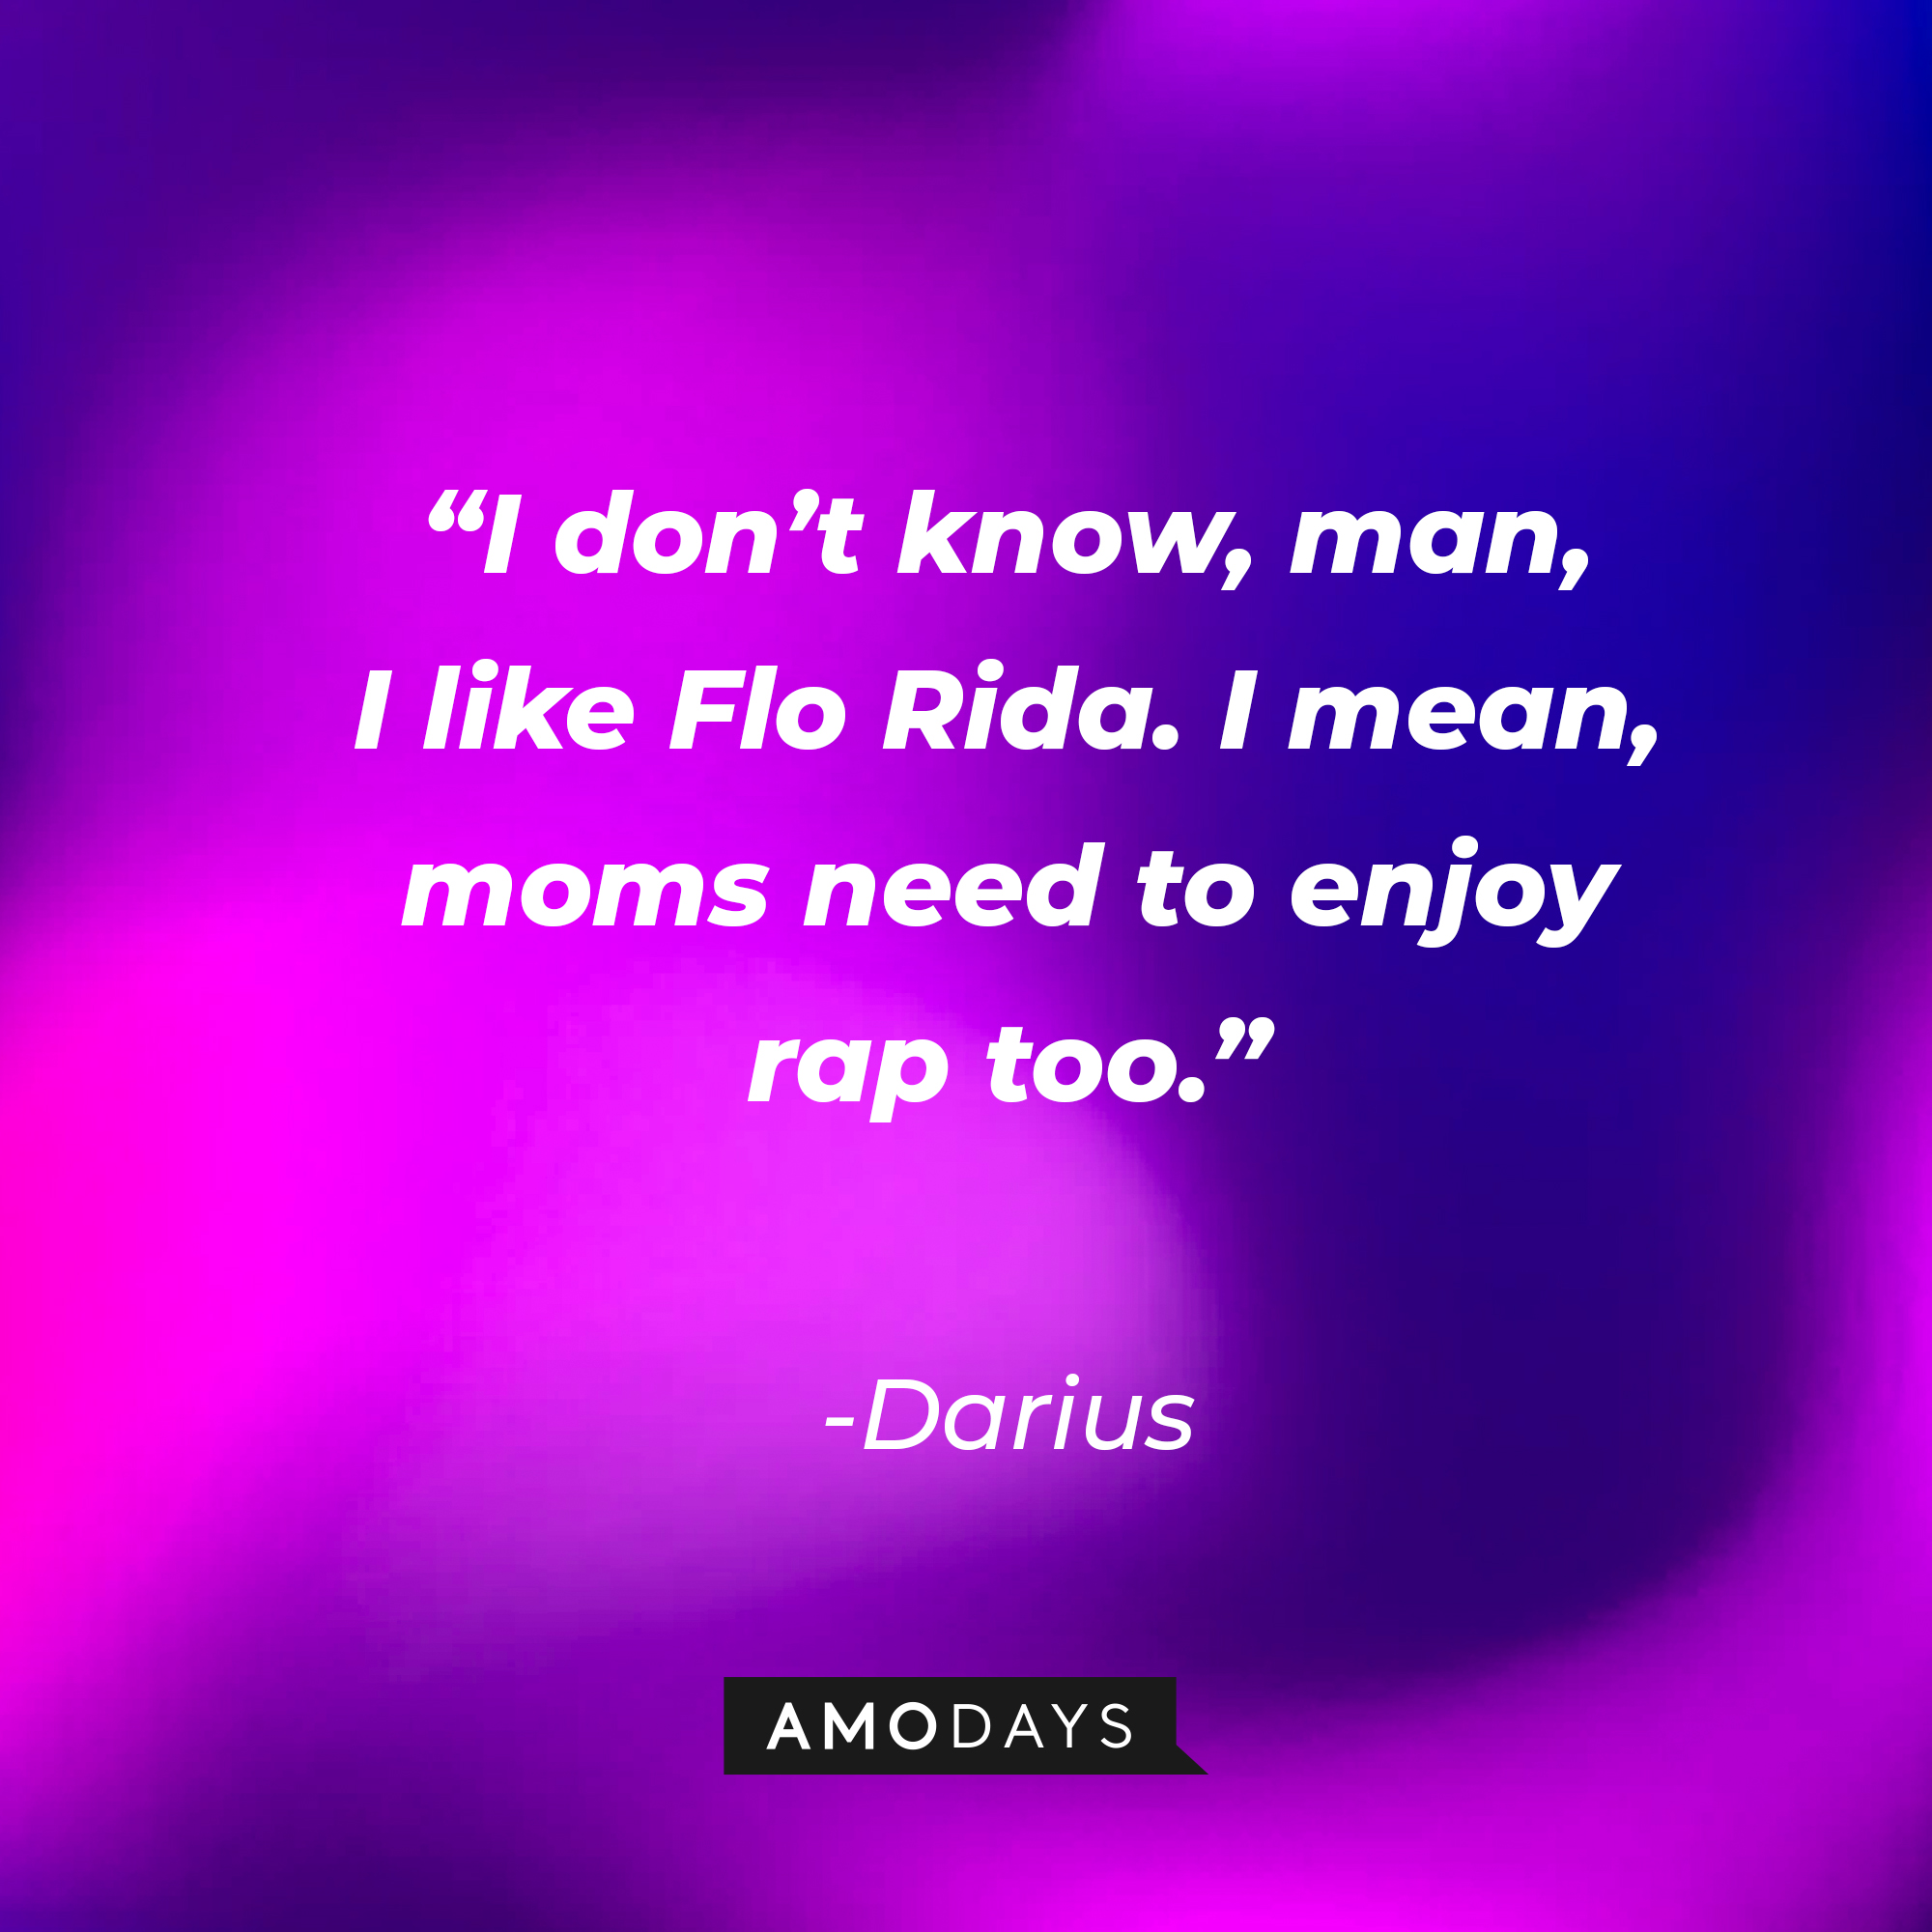 Darius’ quote: “I don’t know, man, I like Flo Rida. I mean, moms need to enjoy rap too.” | Source: AmoDays